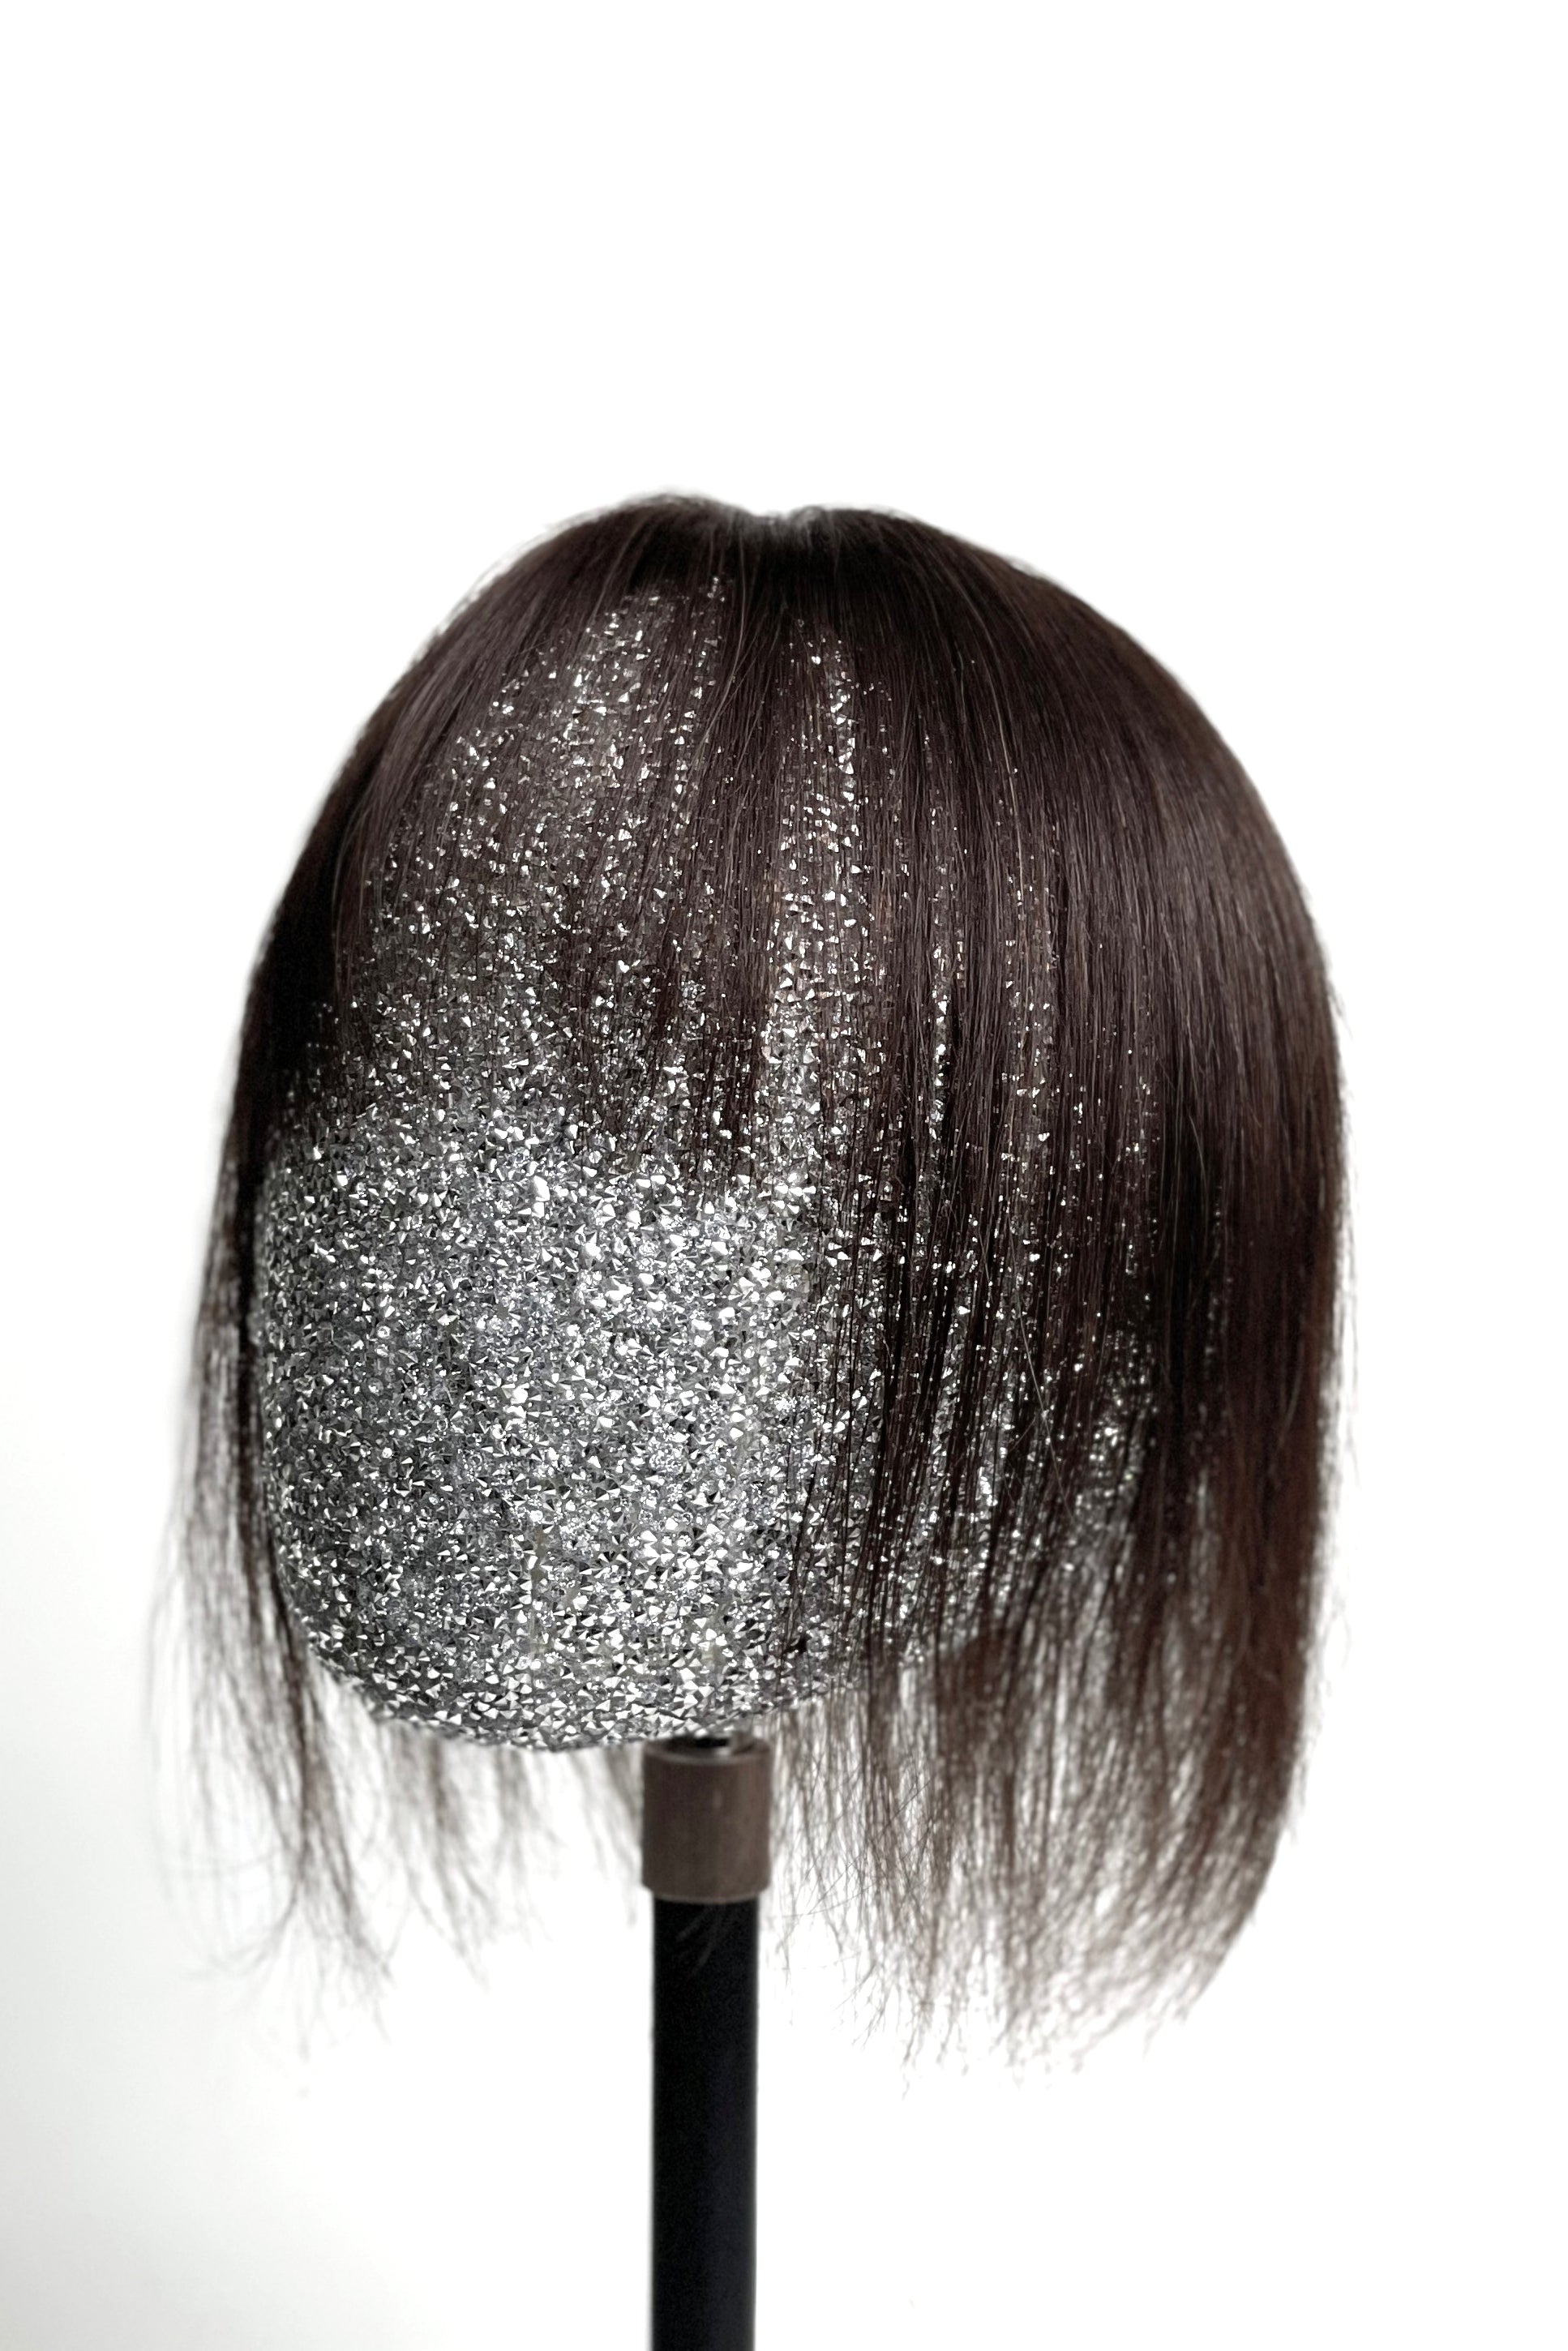 Mona-B Handmade Human Hair Topper with Bangs Dark Brown #2